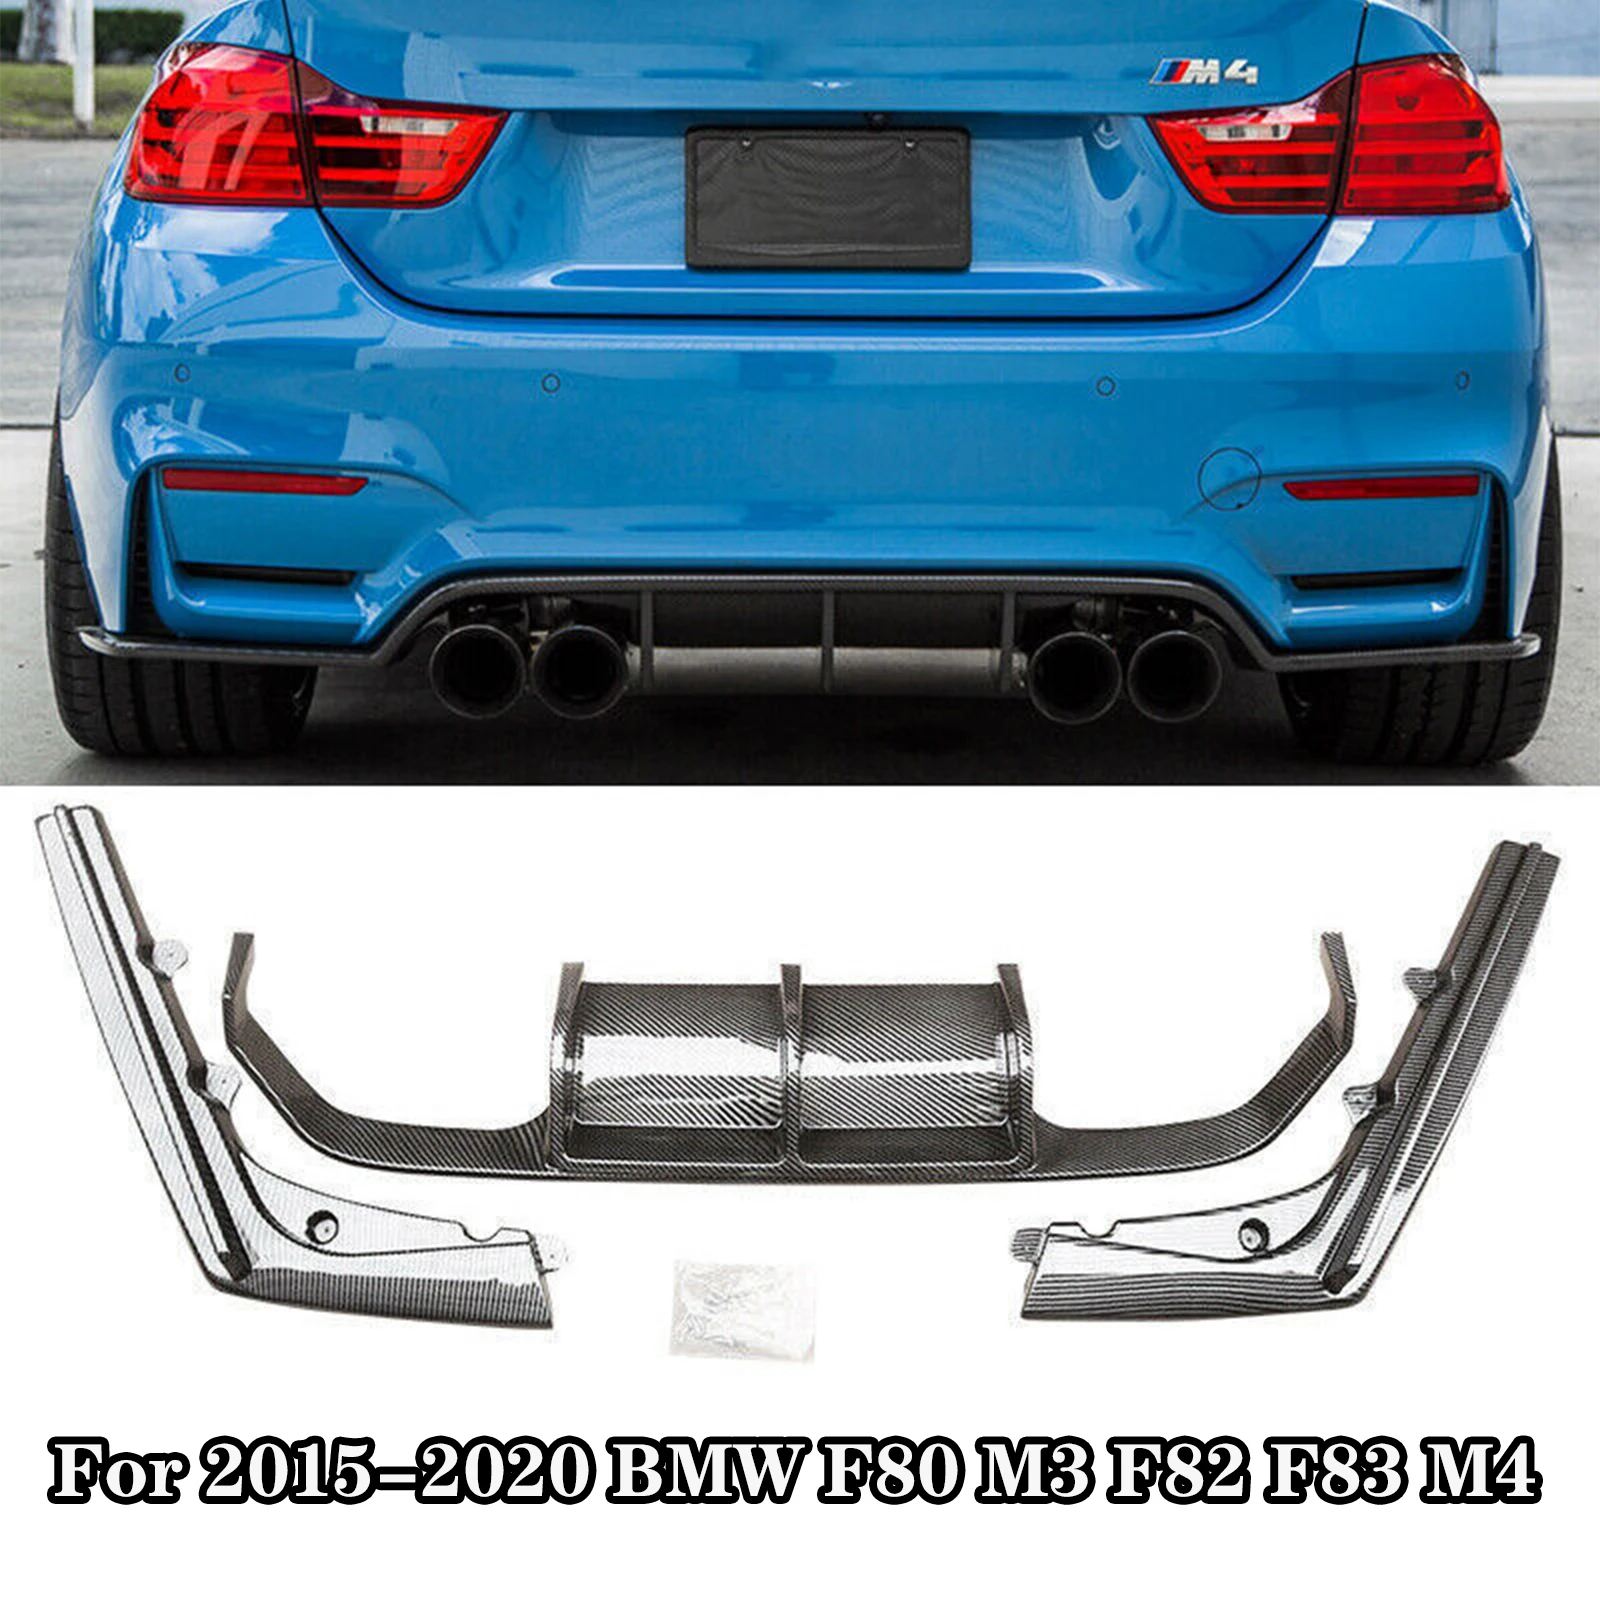 

Rear Bumper Diffuser For 2015-2020 BMW F80 M3 F82 F83 M4 Splitter Spoiler Lip Lower Body Kit Accessories Carbon Fiber Look